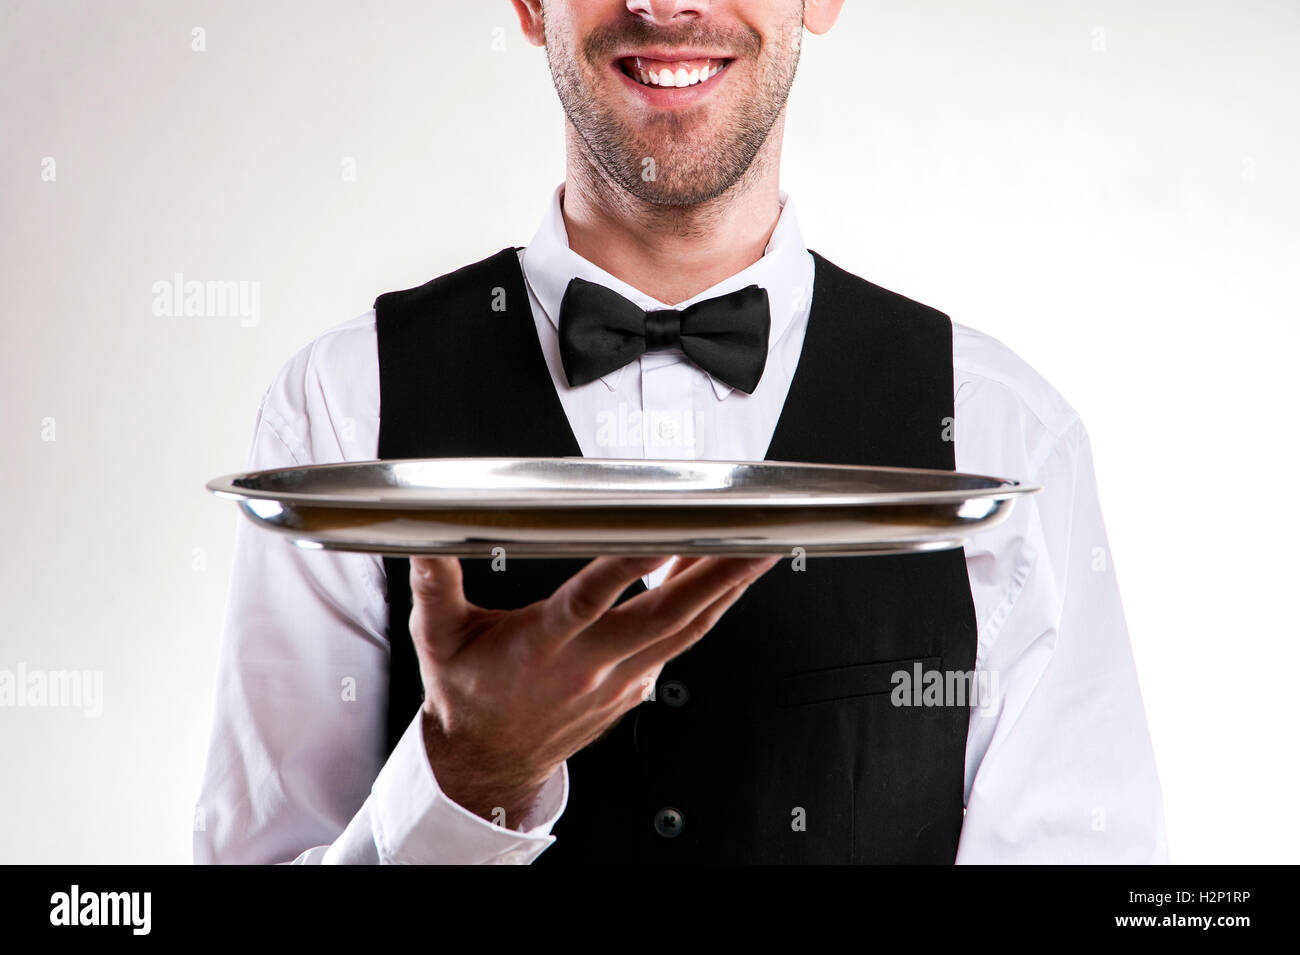 Waiter holding tray. Smiling butler. Stock Photo